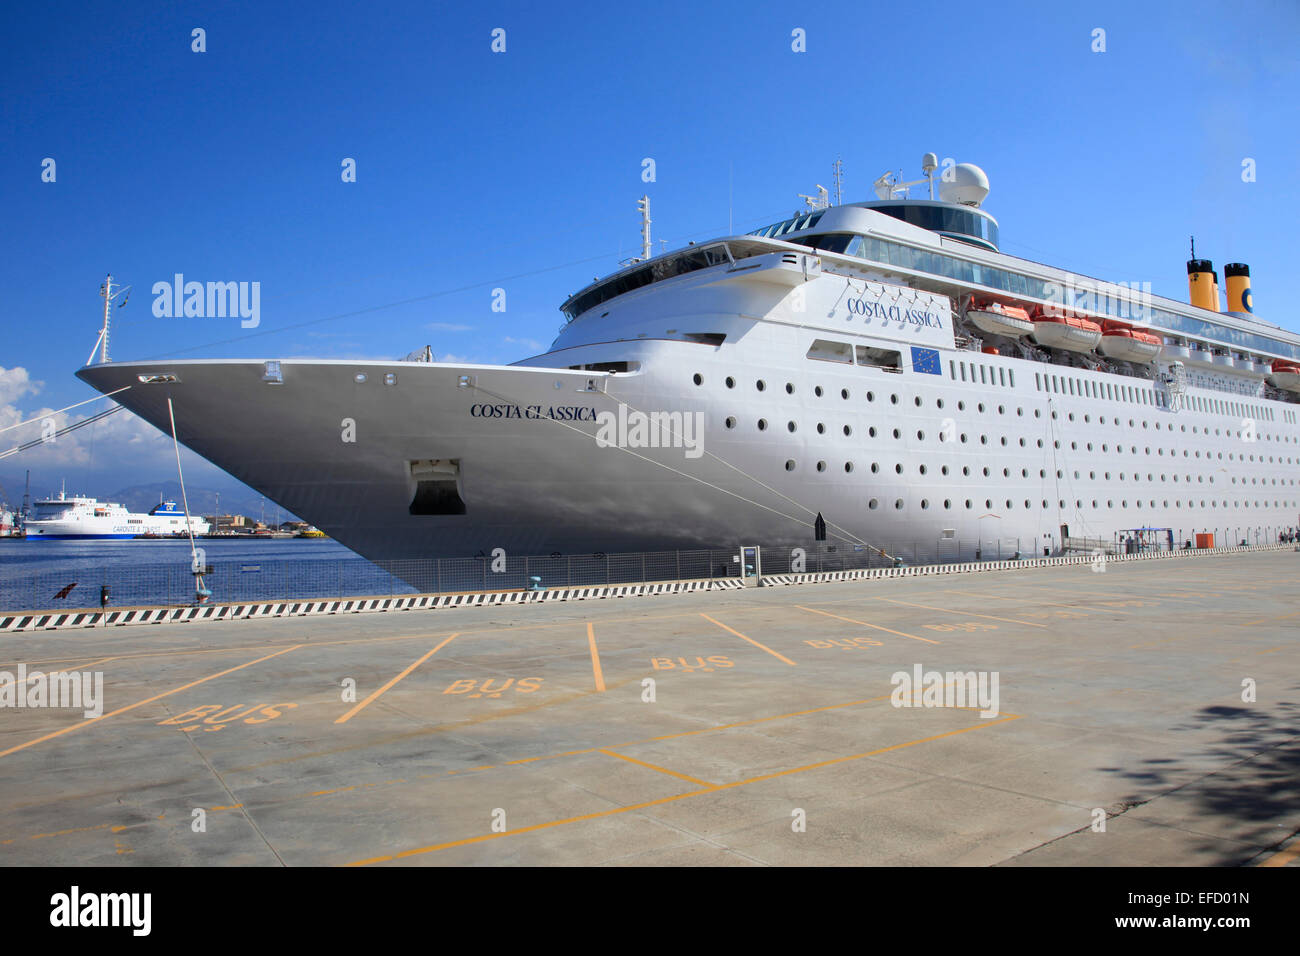 Costa cruise ship 'Costa Classica' docked in Messina Italy Stock Photo